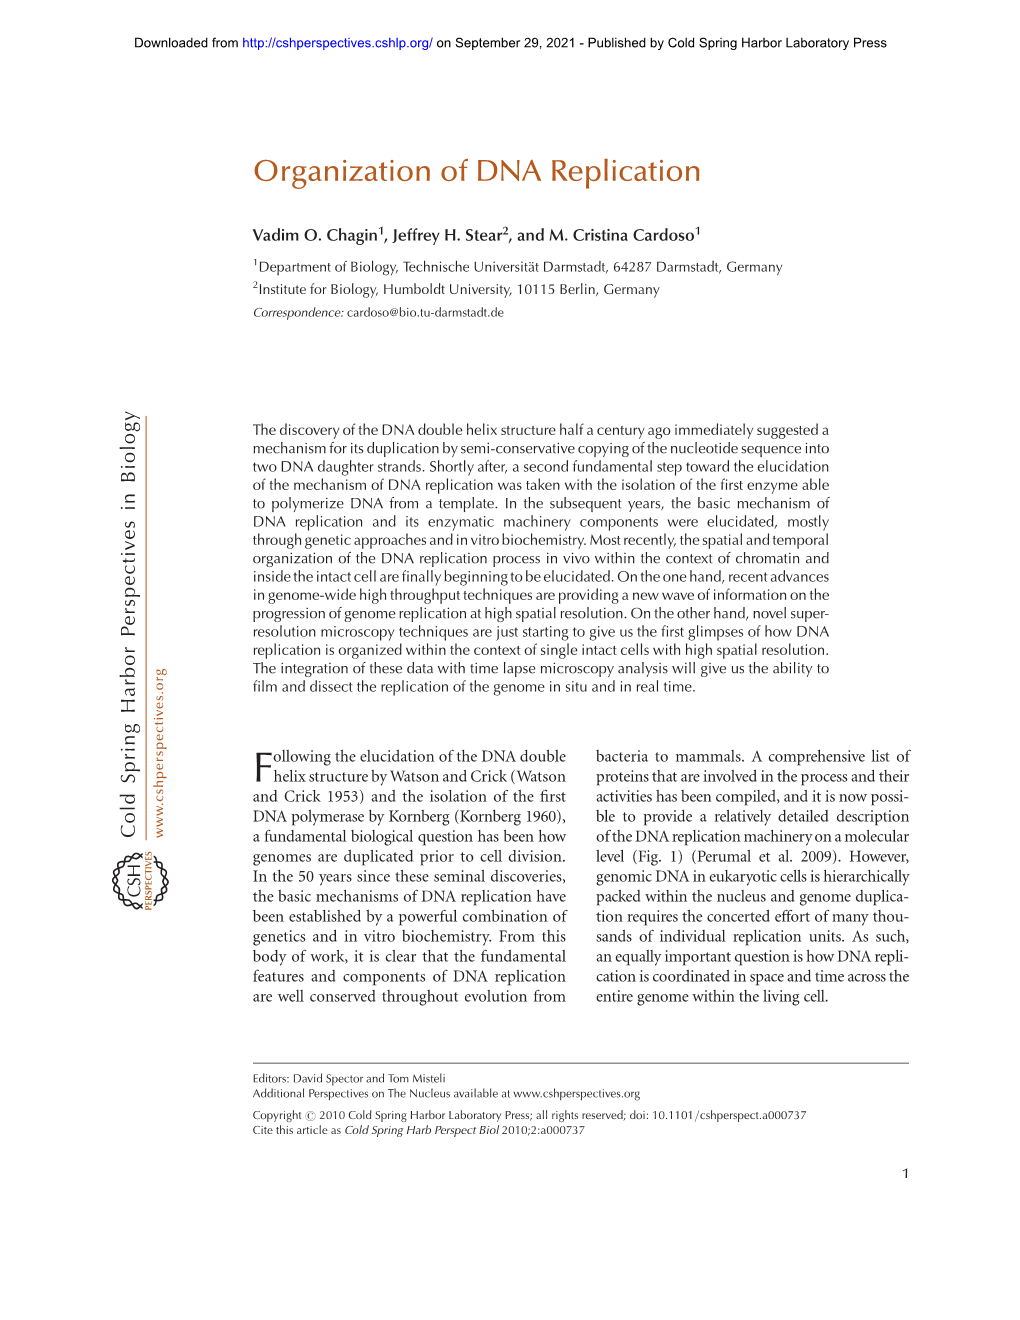 Organization of DNA Replication